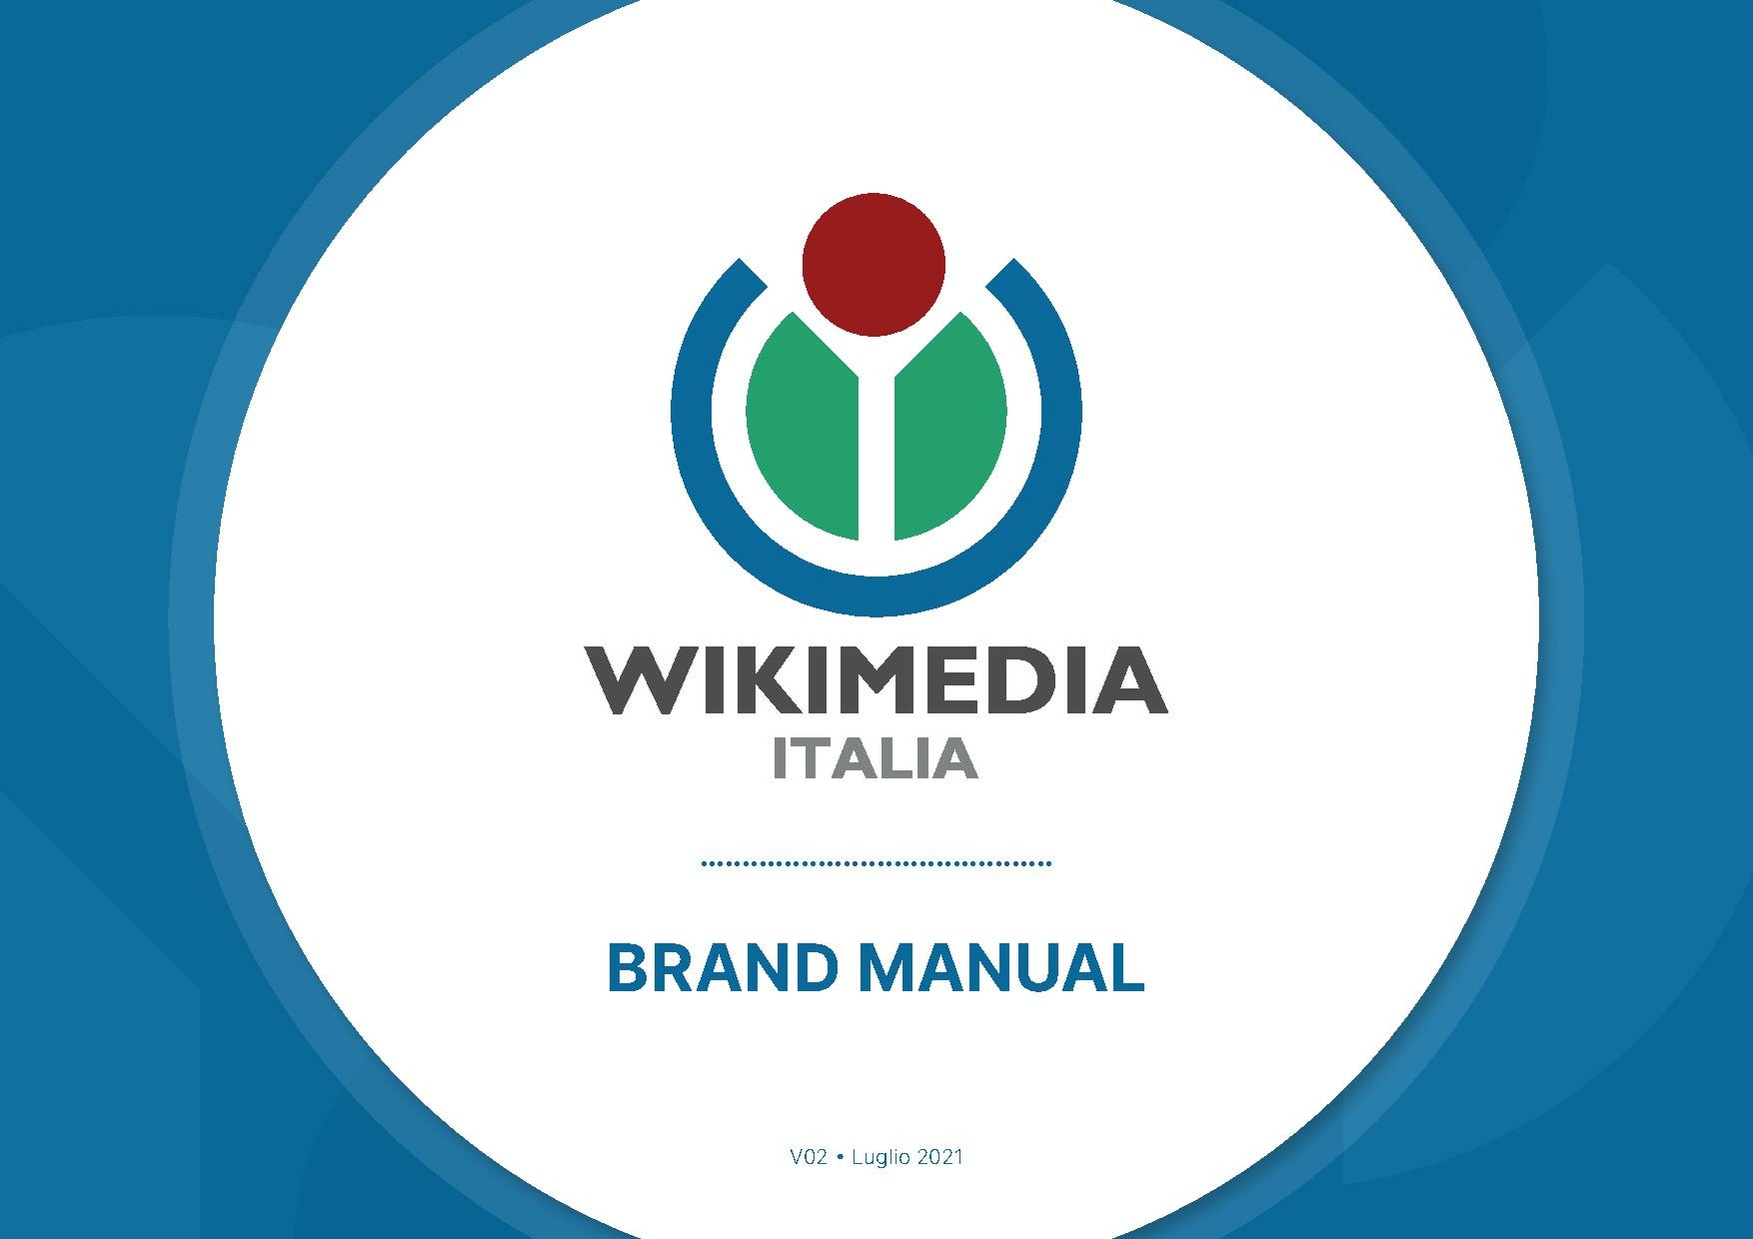 Manuale di brand di Wikimedia Italia in inglese